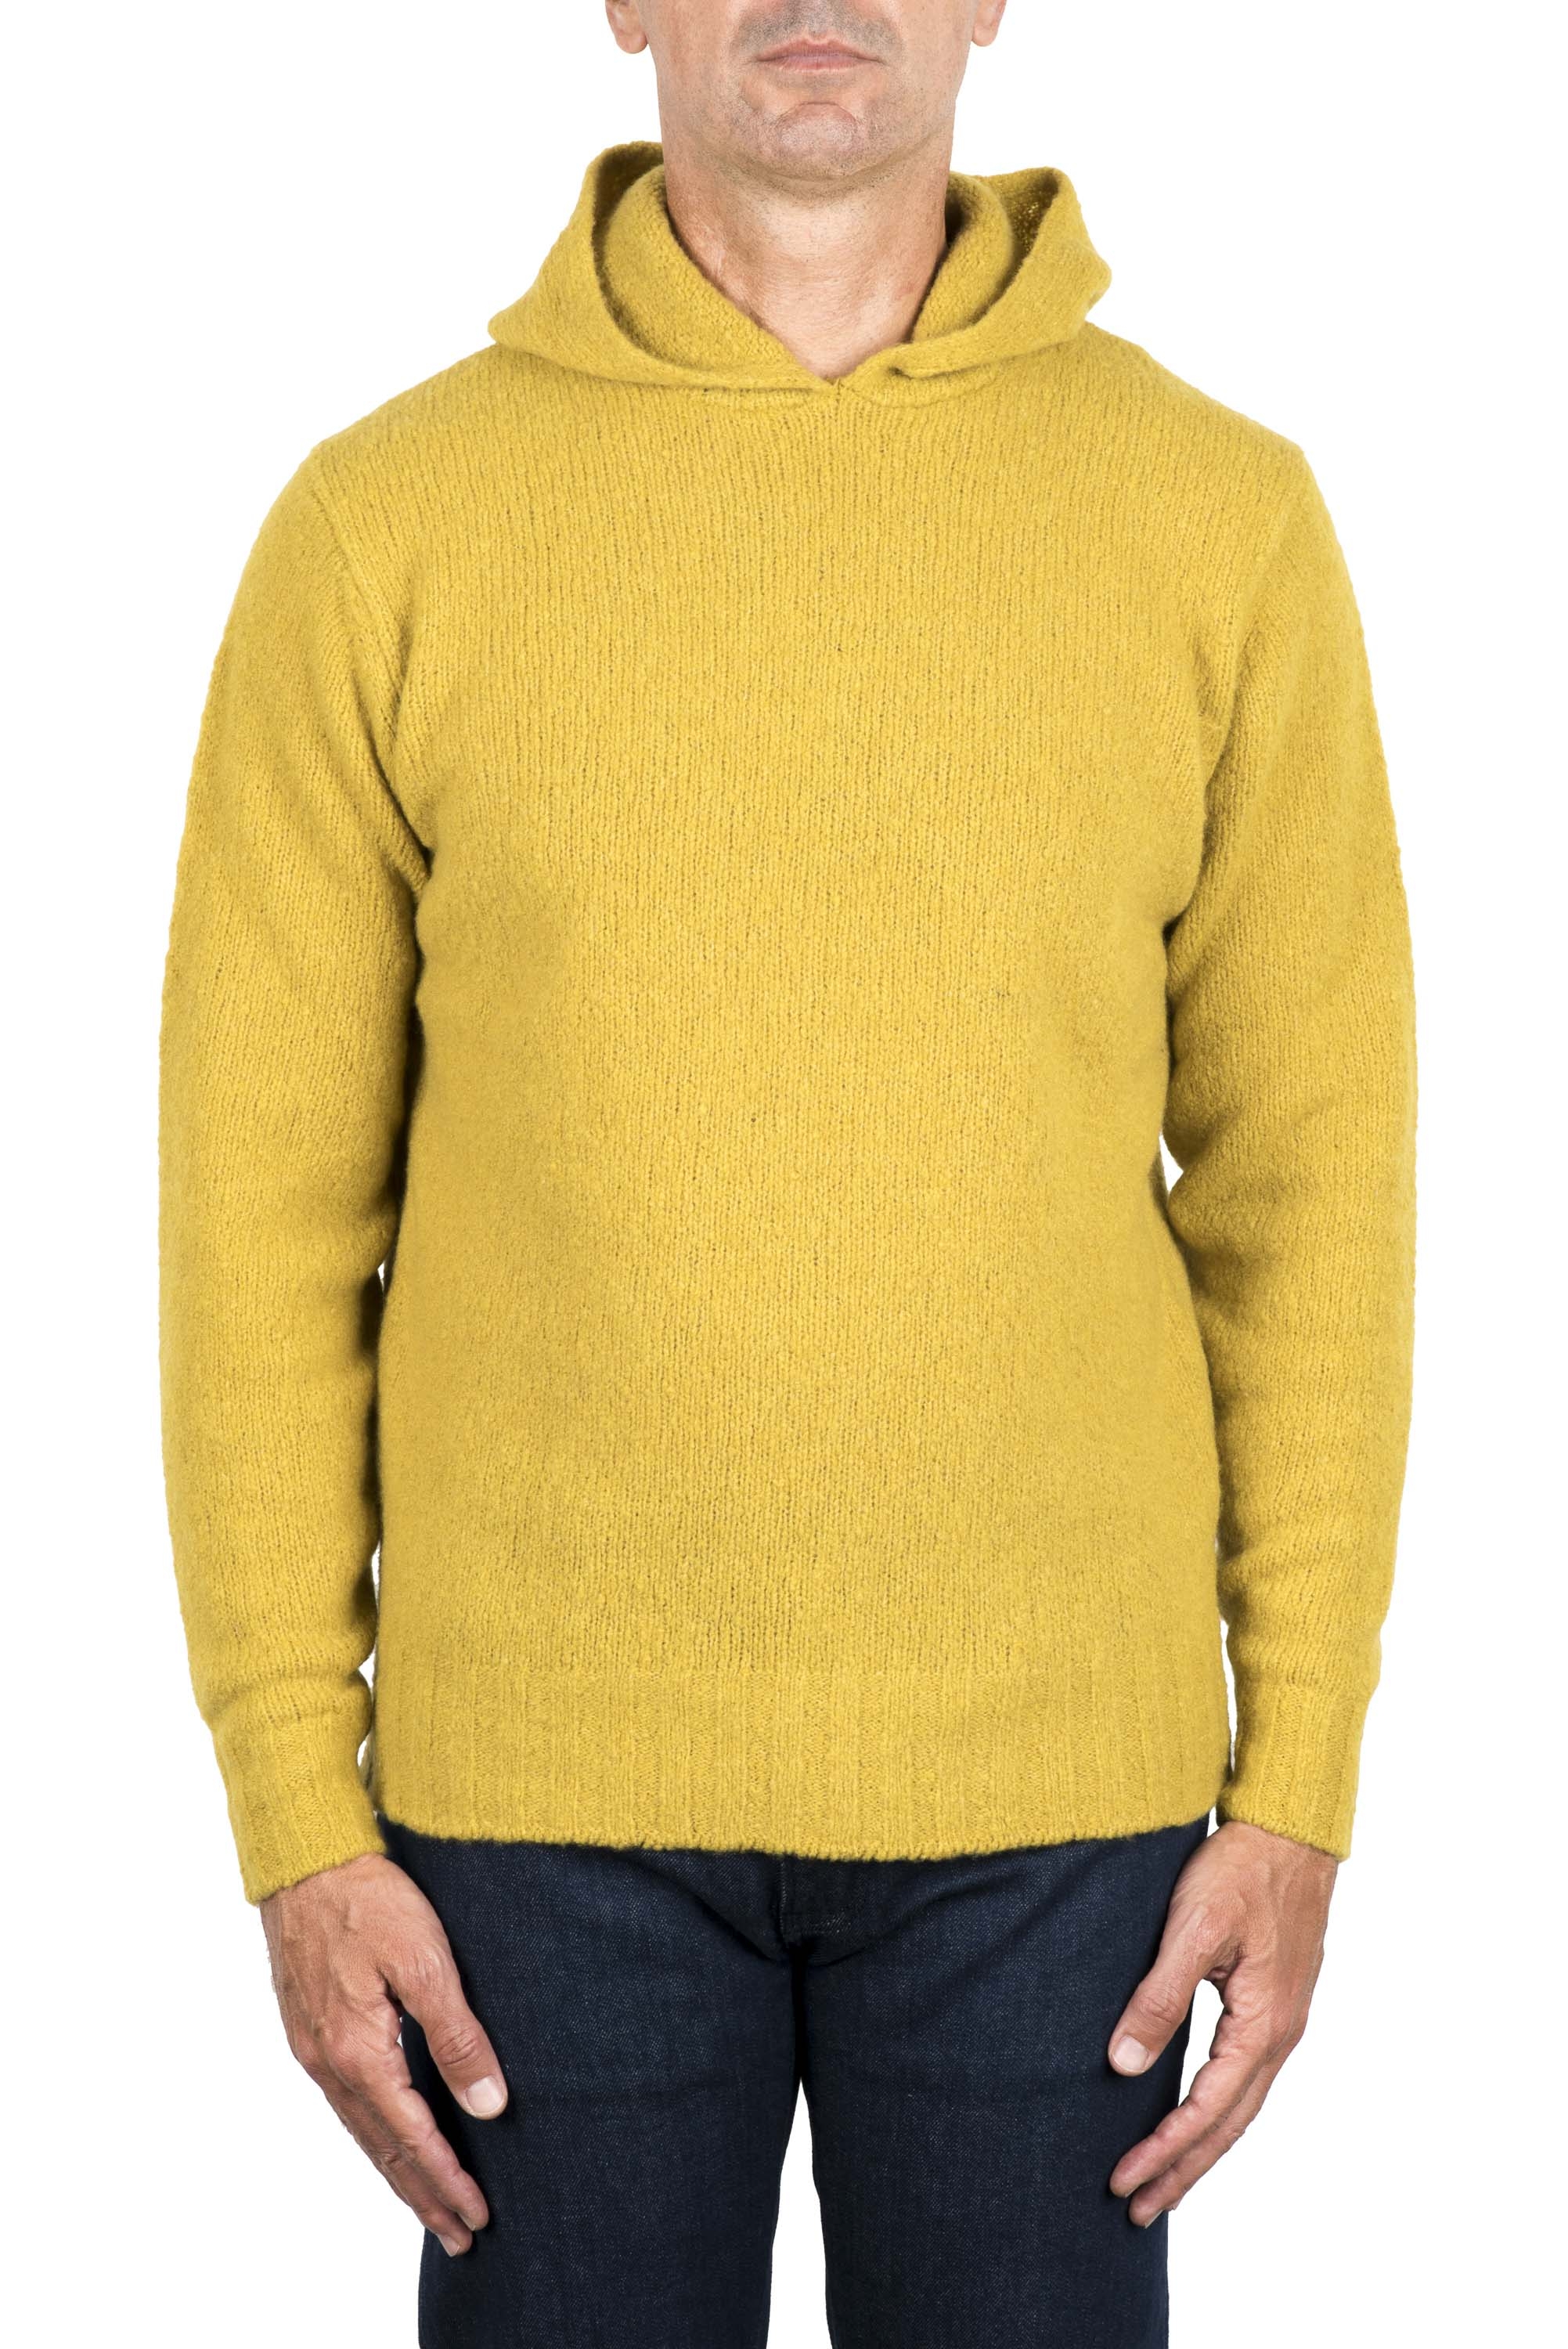 SBU 04695_23AW Jersey con capucha de mezcla de lana y cachemira amarillo 01